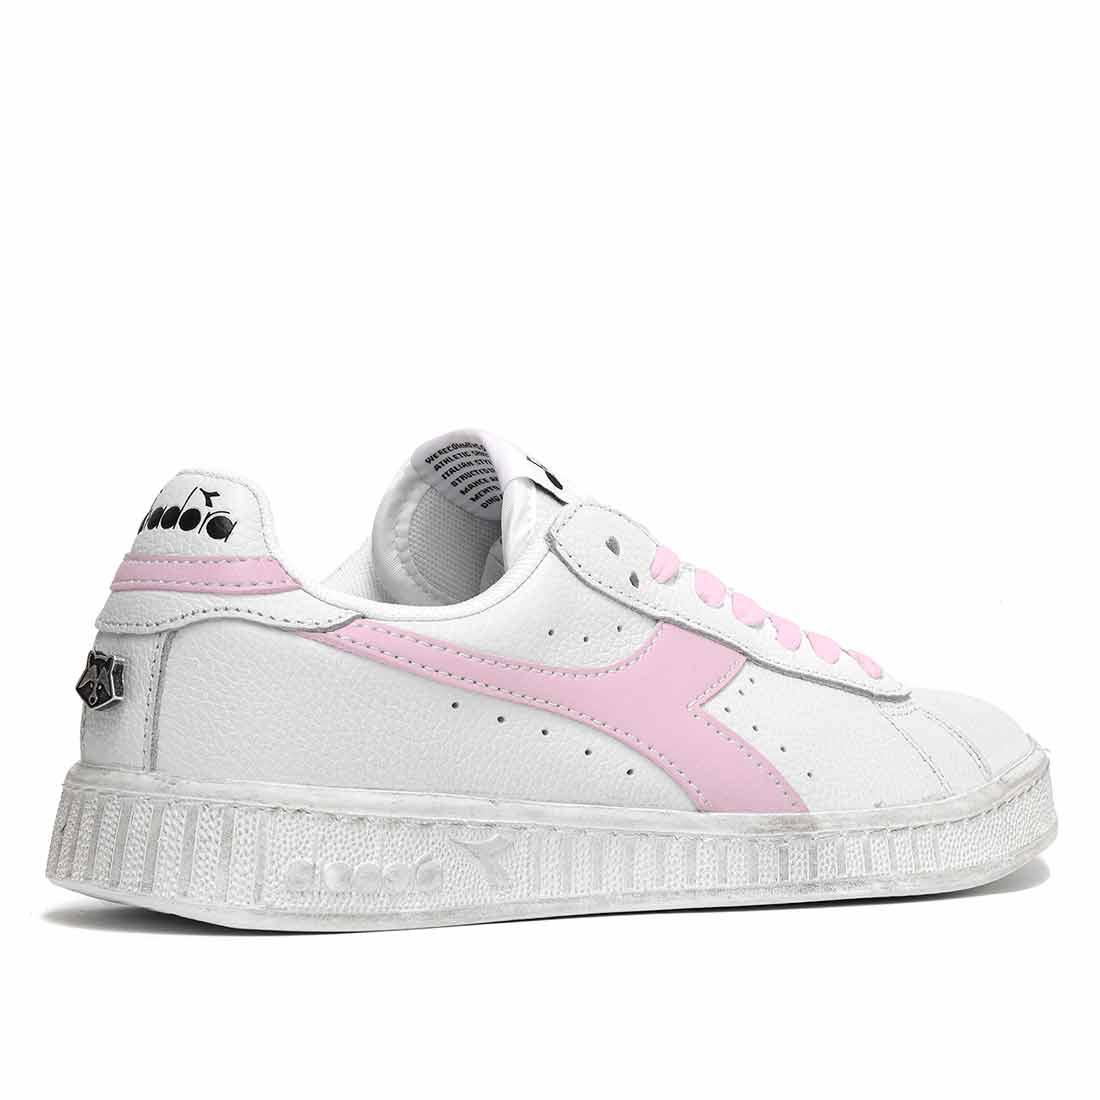 sneakers diadora colori pastello rosa